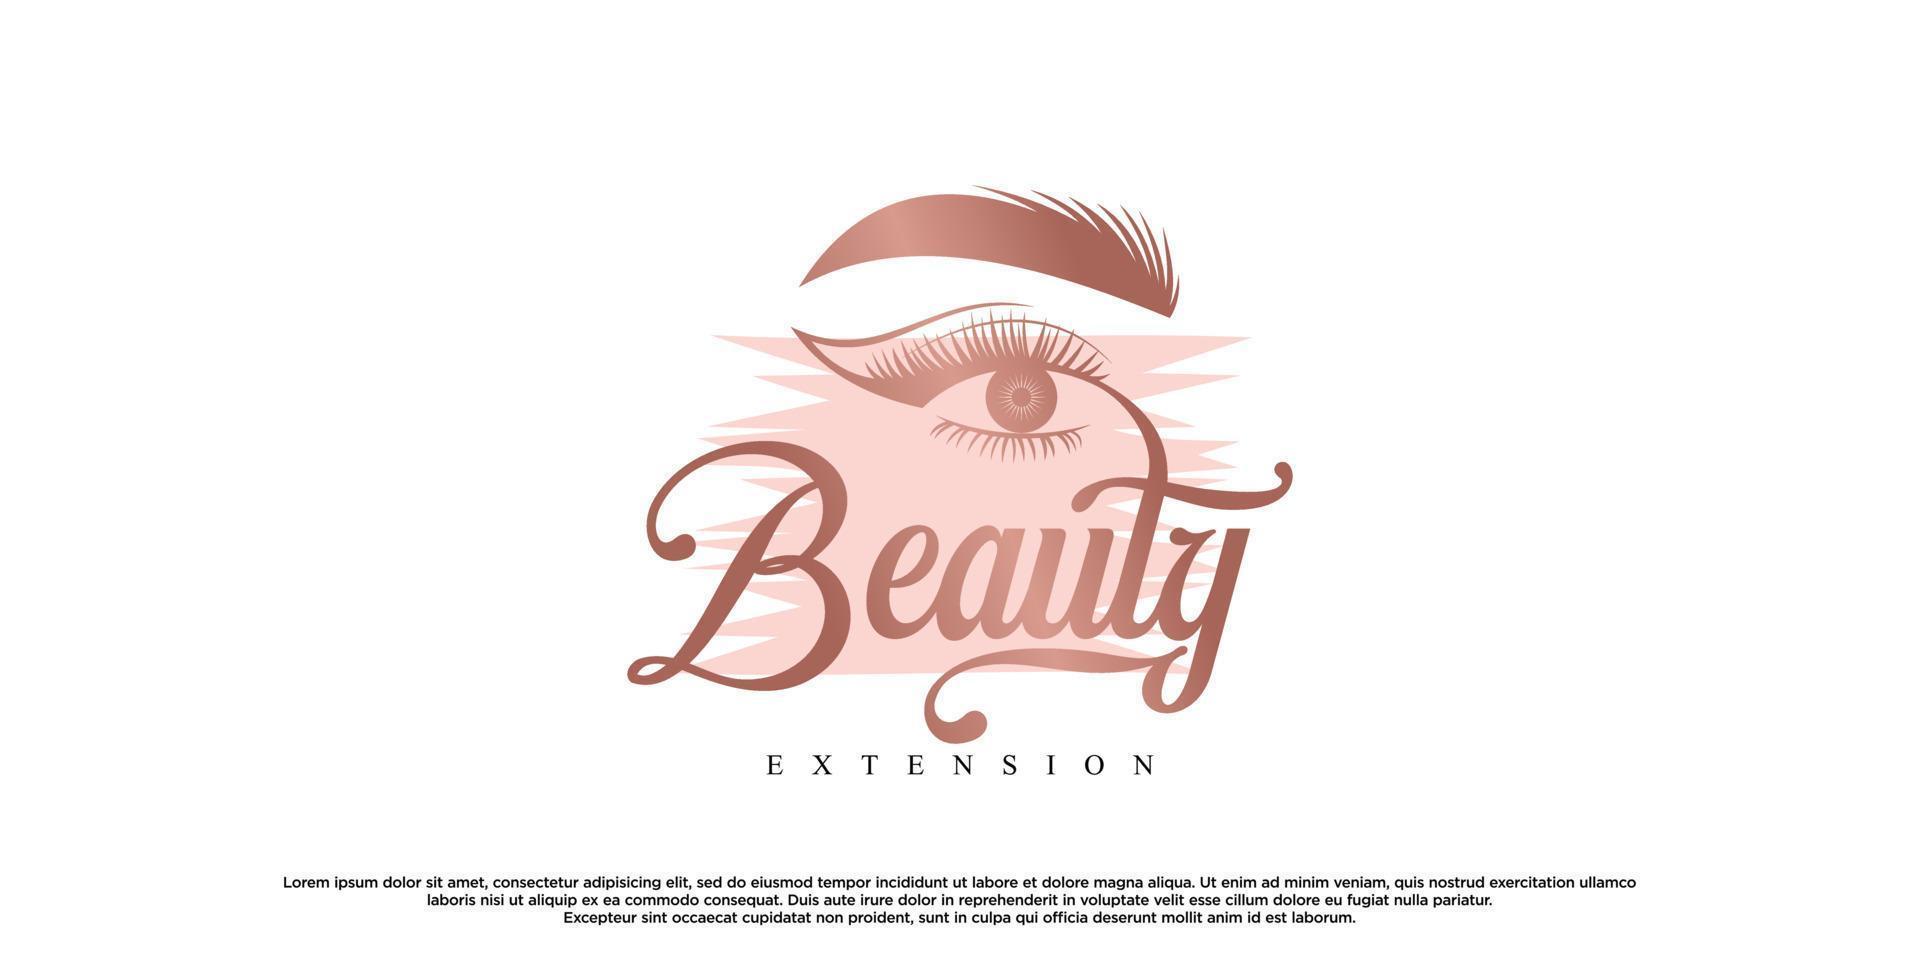 Beauty eyelash extension logo design inspiration with creative modern concept Premium Vector